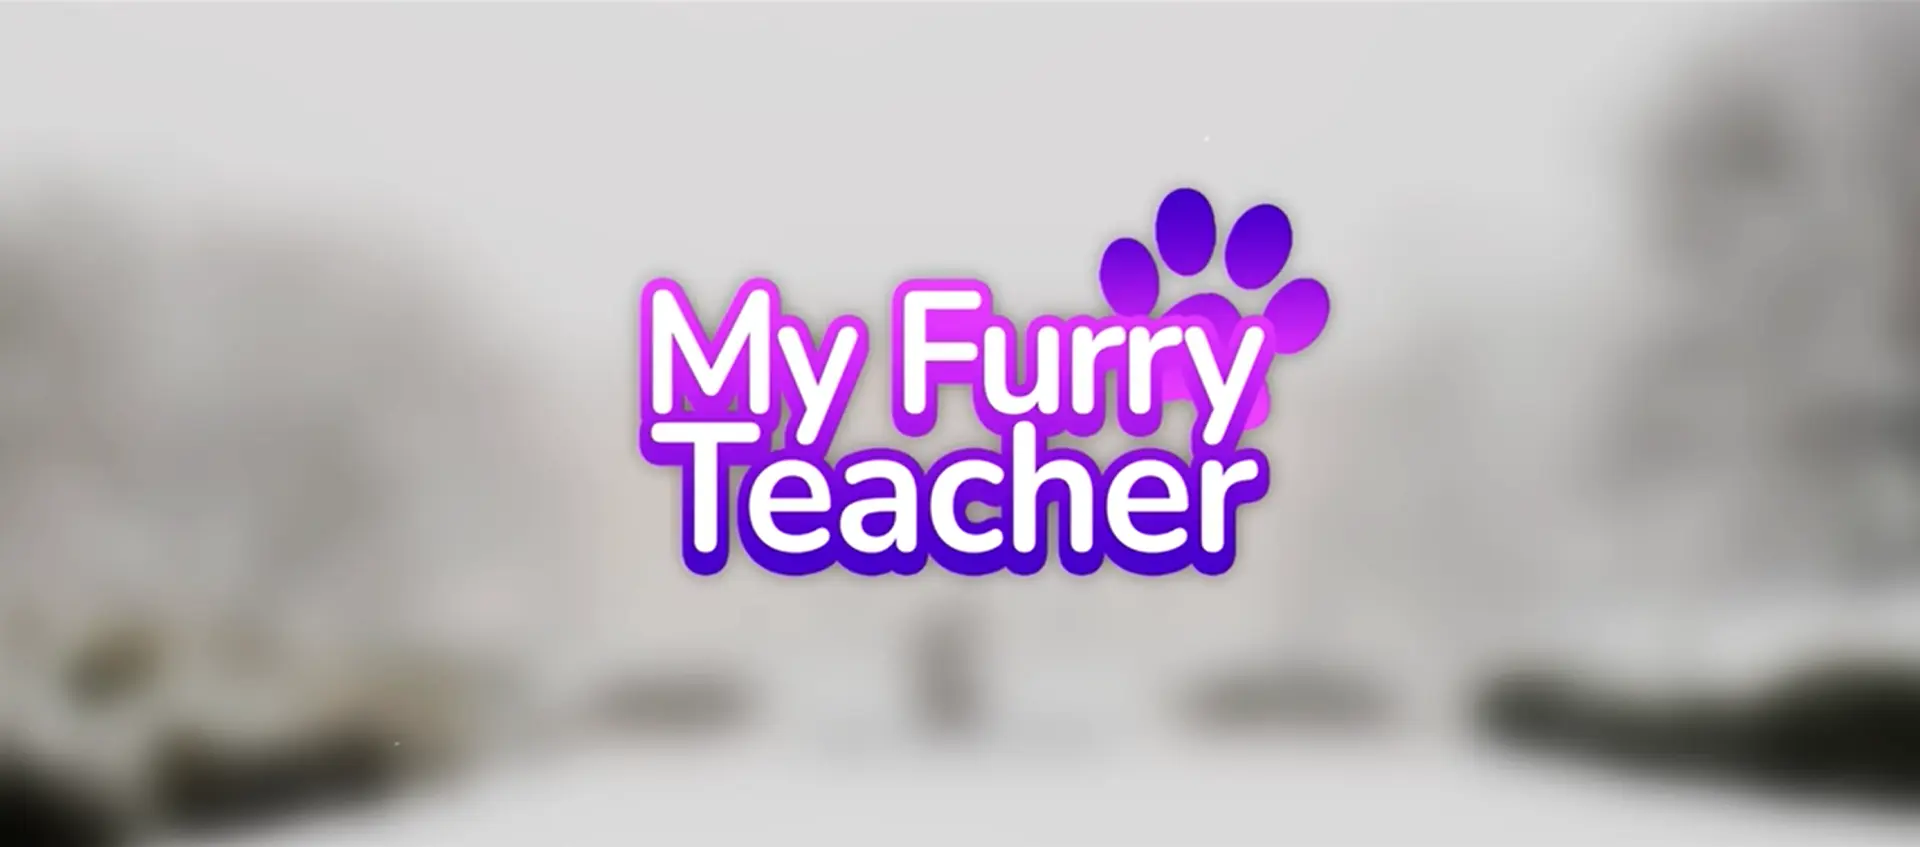 My Furry Teacher main image